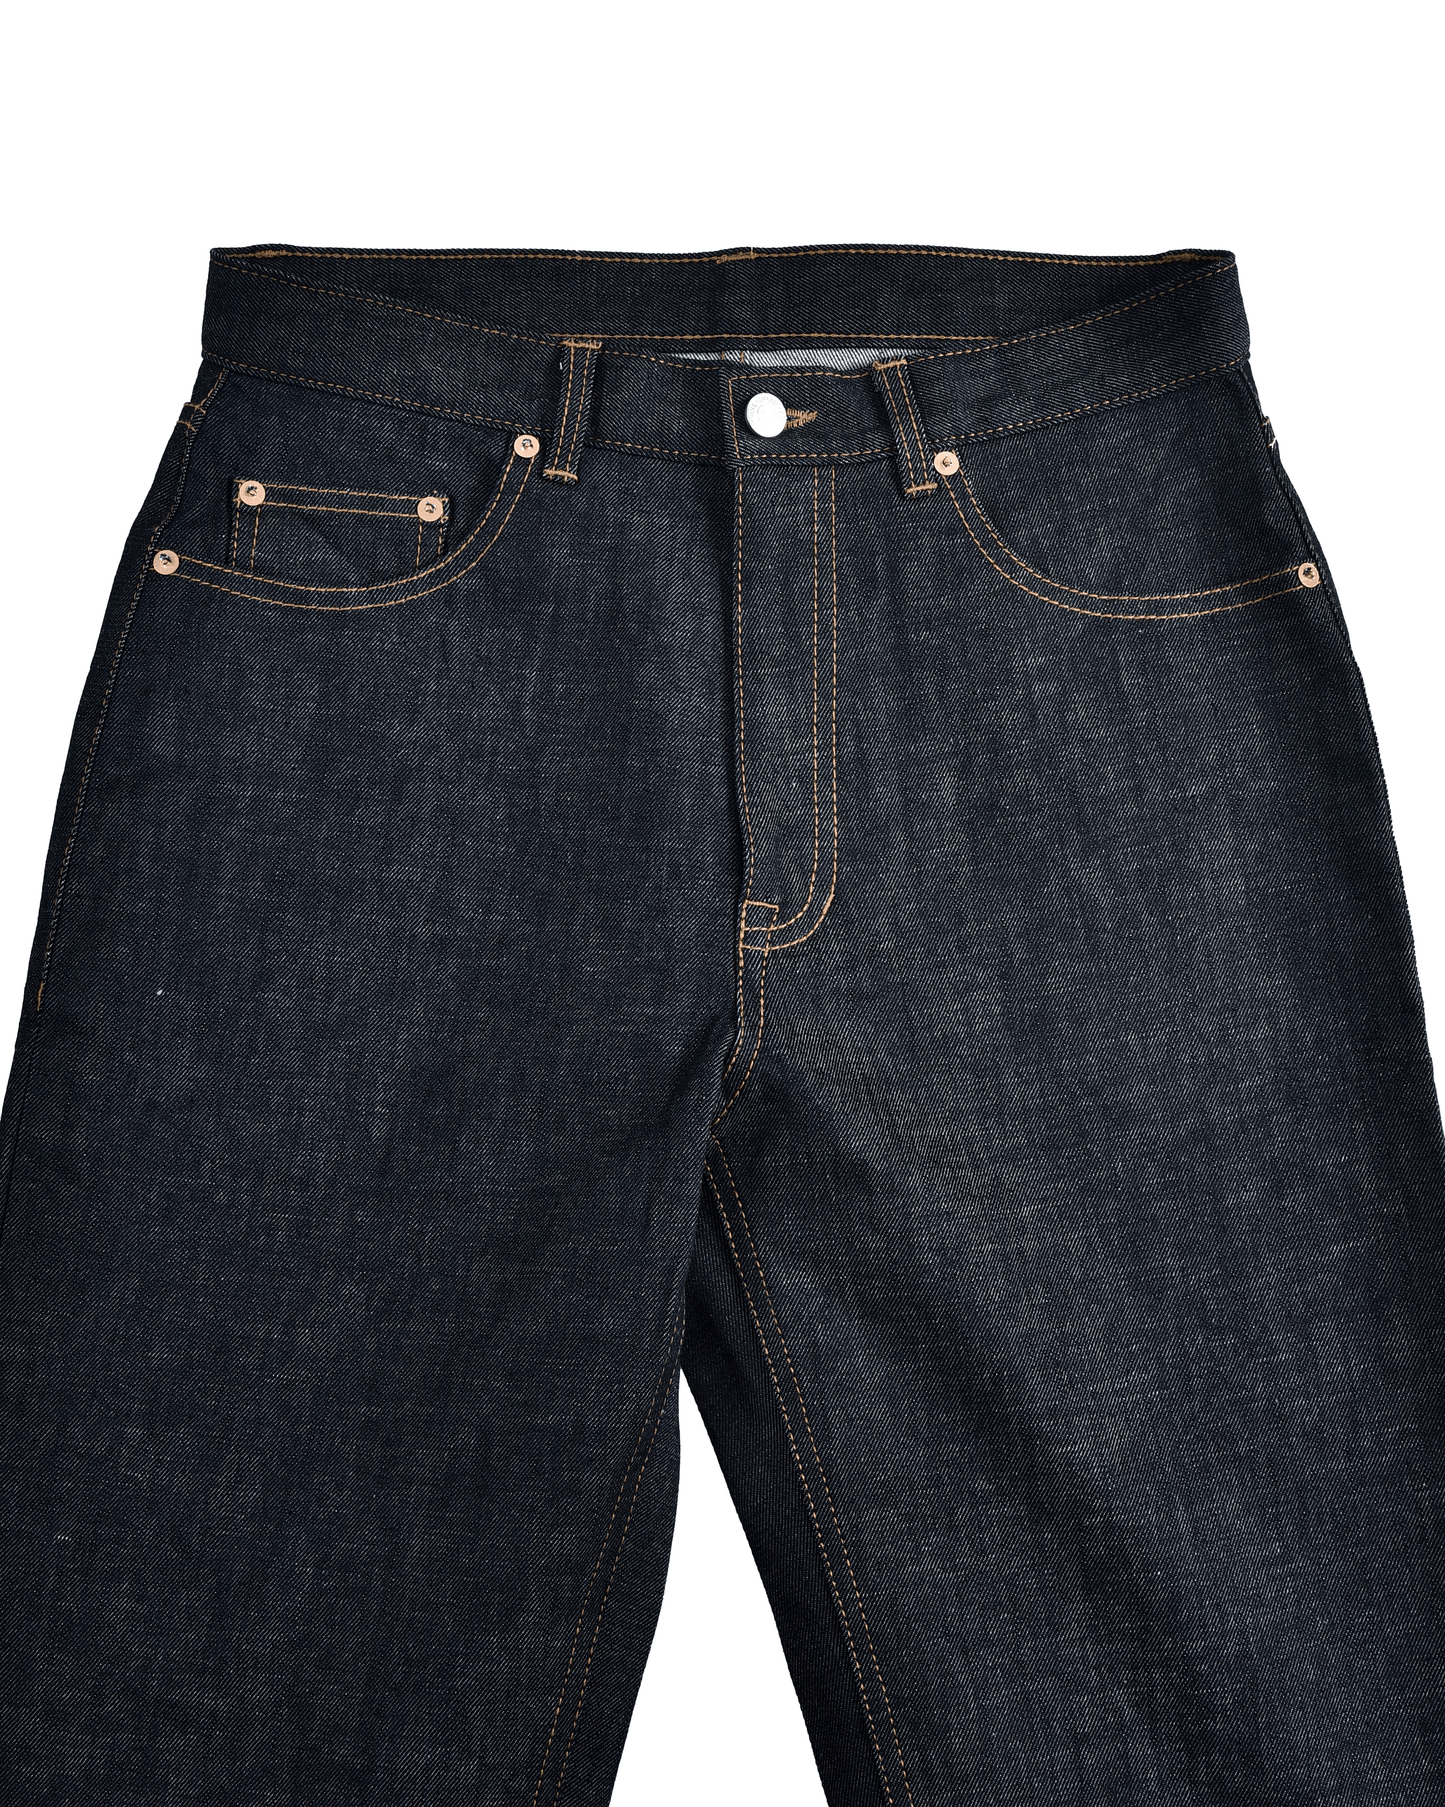 Front view of custom denim jeans for men by Luxire in dark indigo